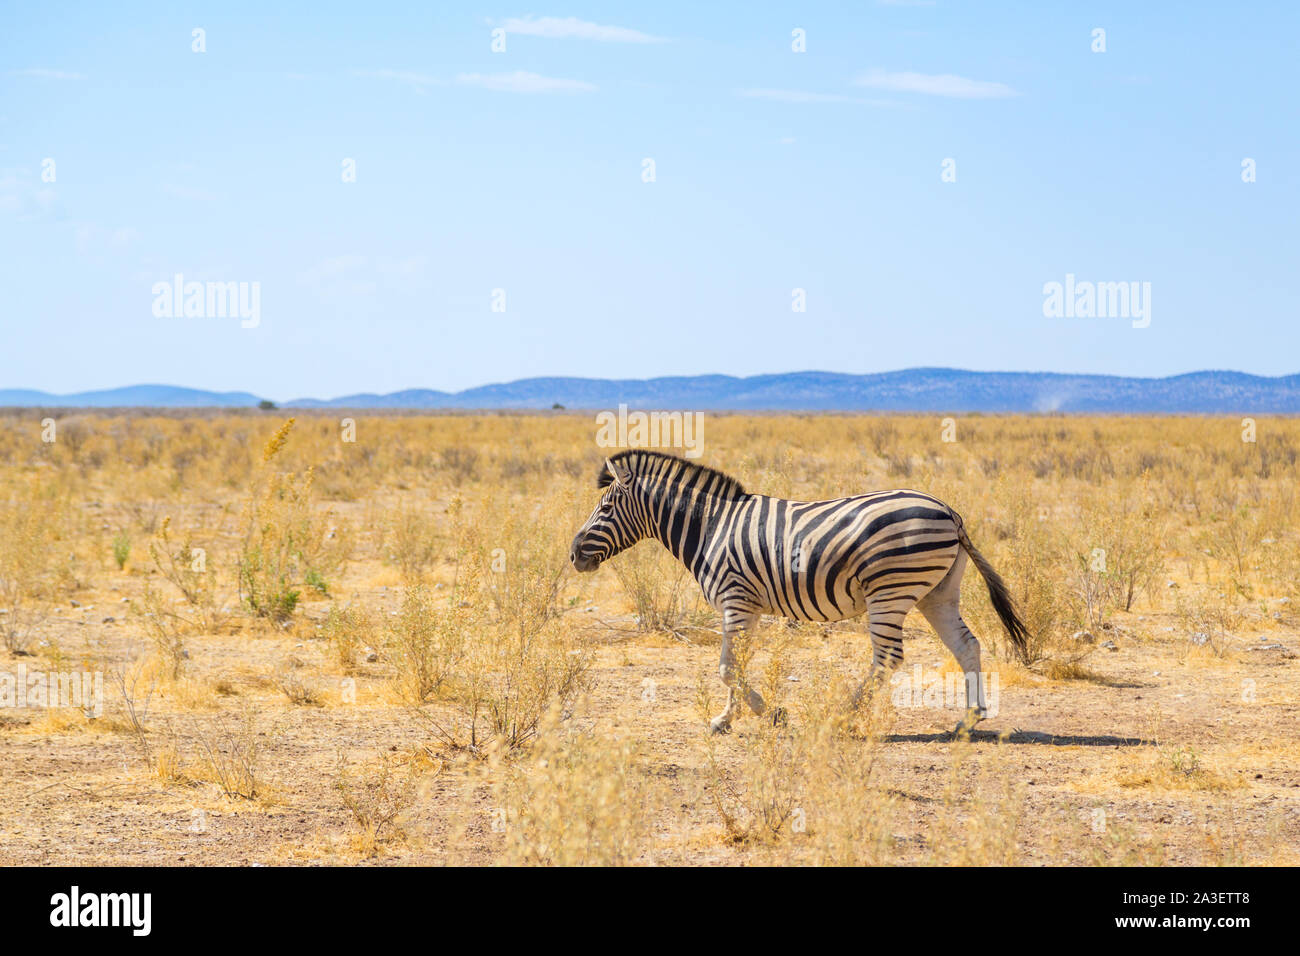 one natural zebra walking through natural grassland savanna, blue sky Stock Photo